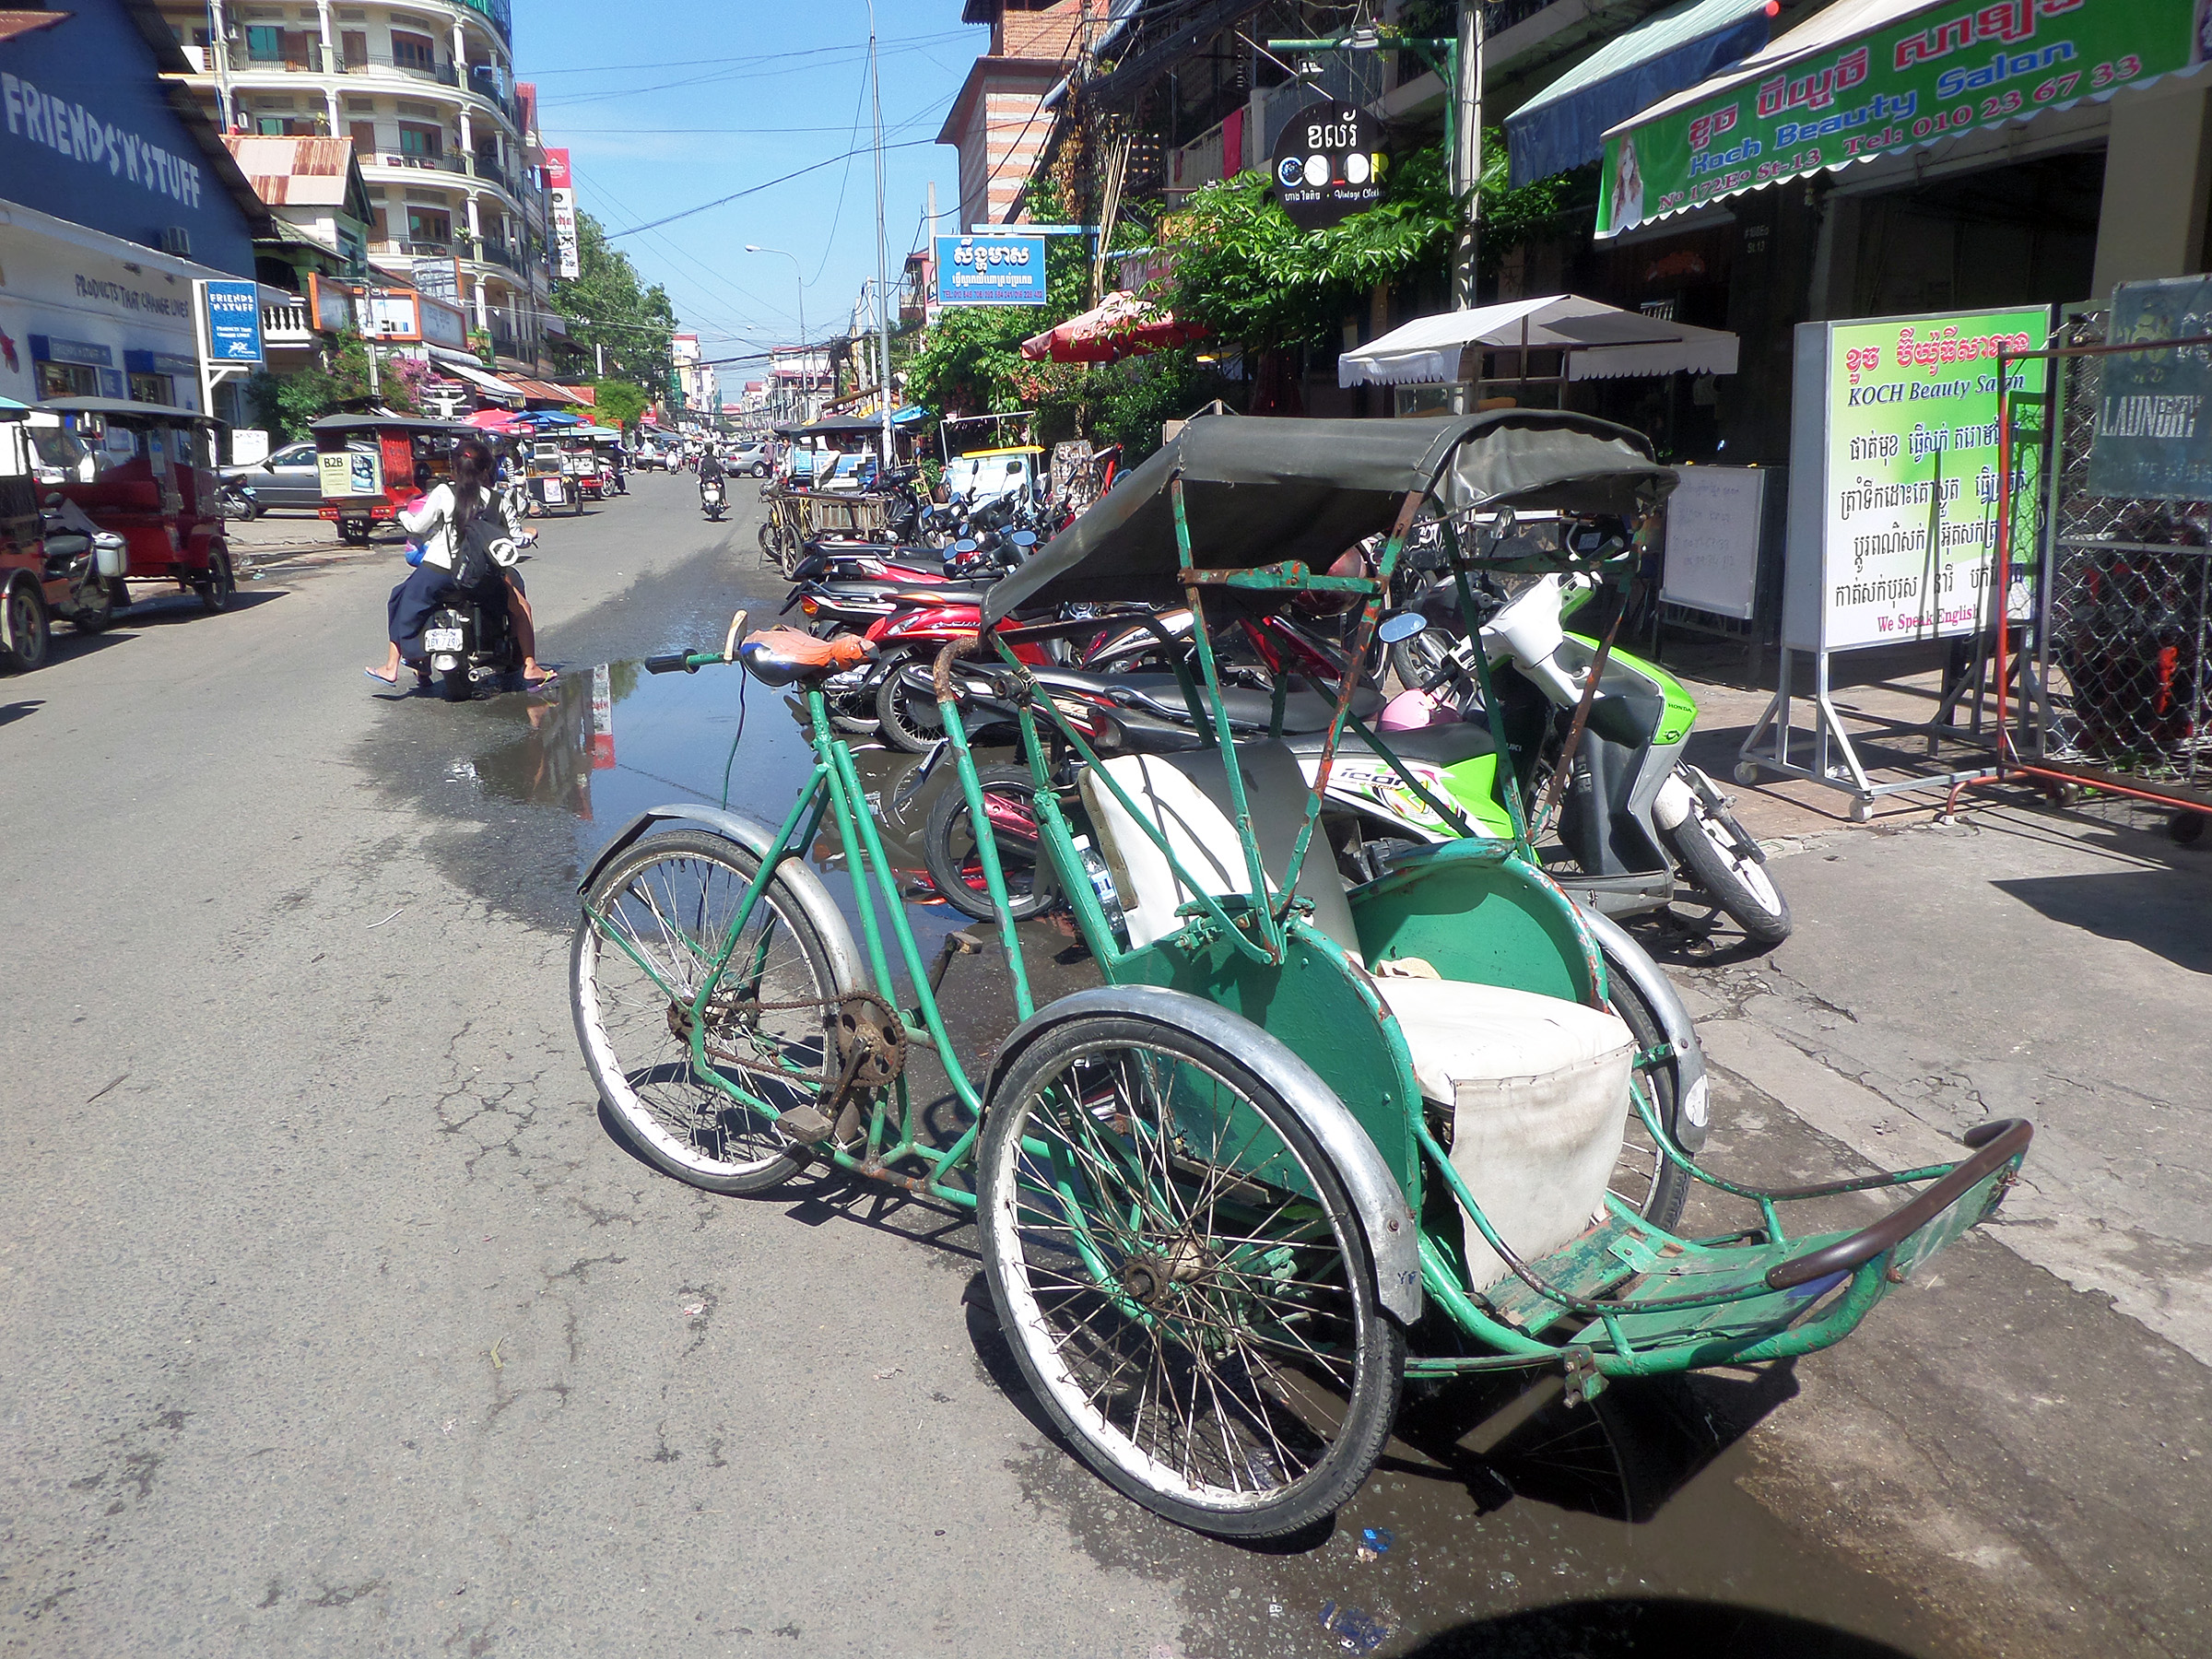 Parked cambodian cyclos photo